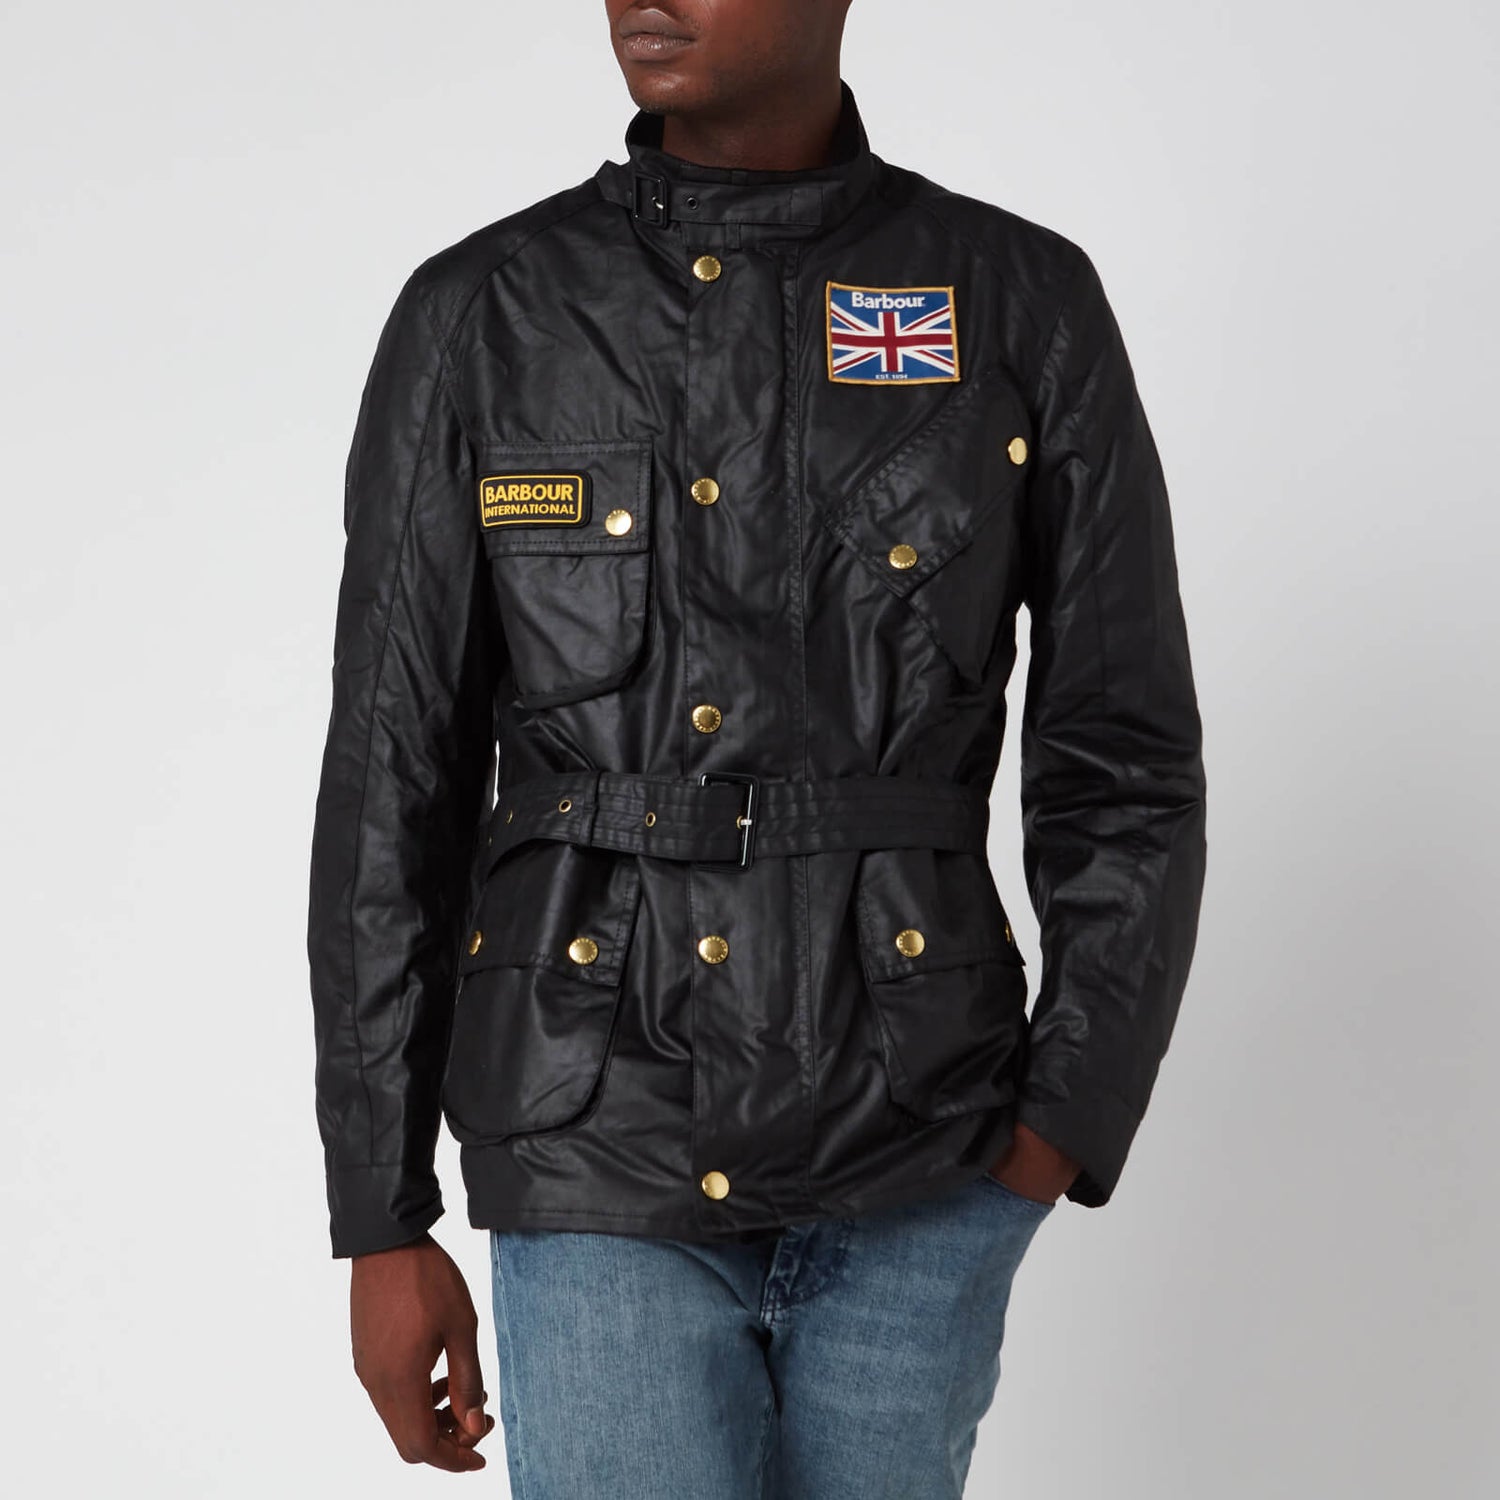 Barbour International Men's Union Jack International Jacket - Black - M